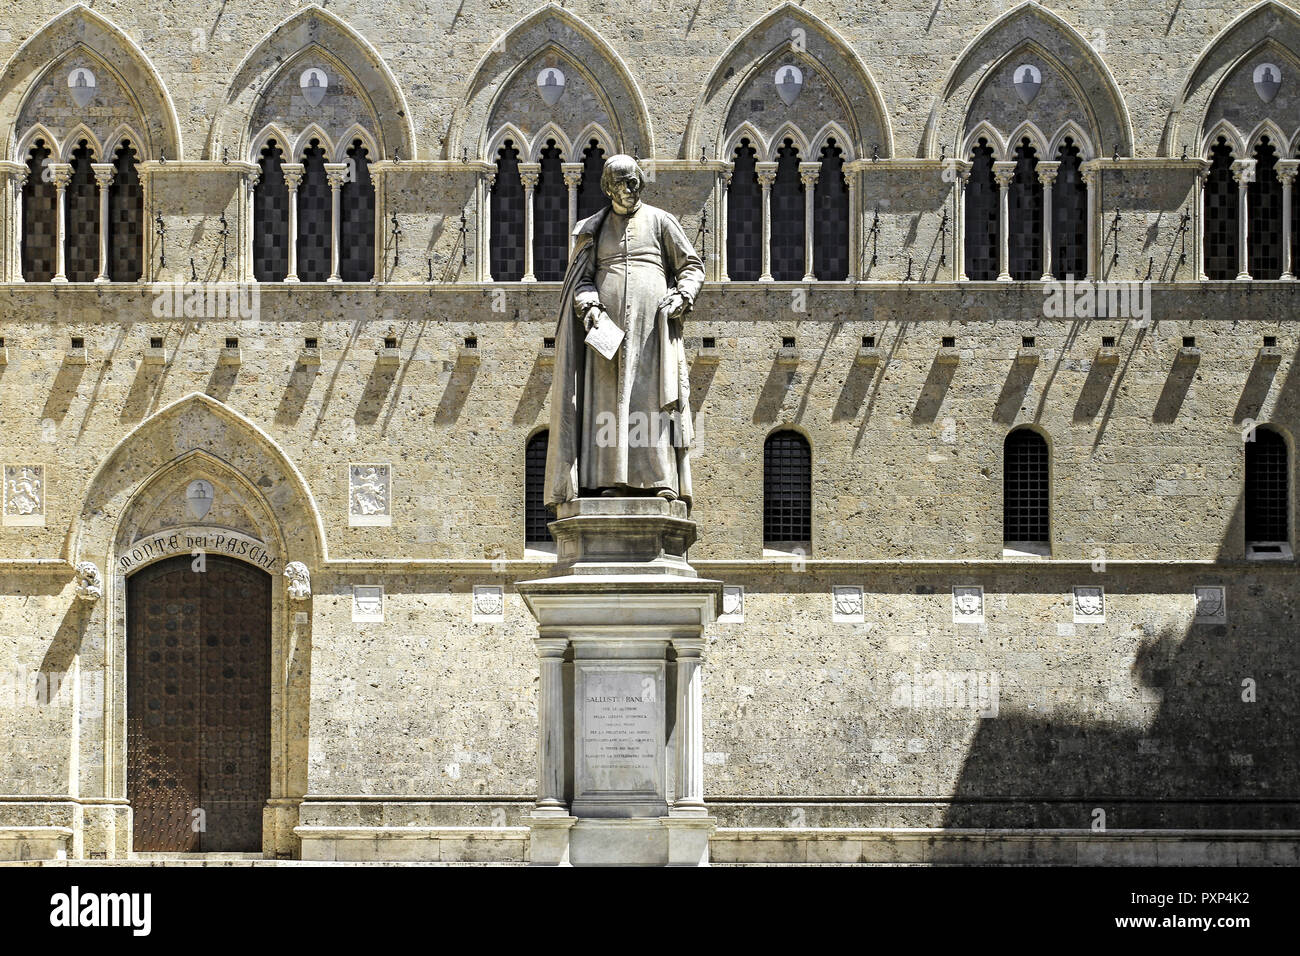 Italien Toskana, Siena, Banca Monte dei Paschi di Siena, Palazzo Salimbeni mit statua des Kanonikers Sallustion Bandini, Italia, Toscana, Palazzo Sali Foto Stock